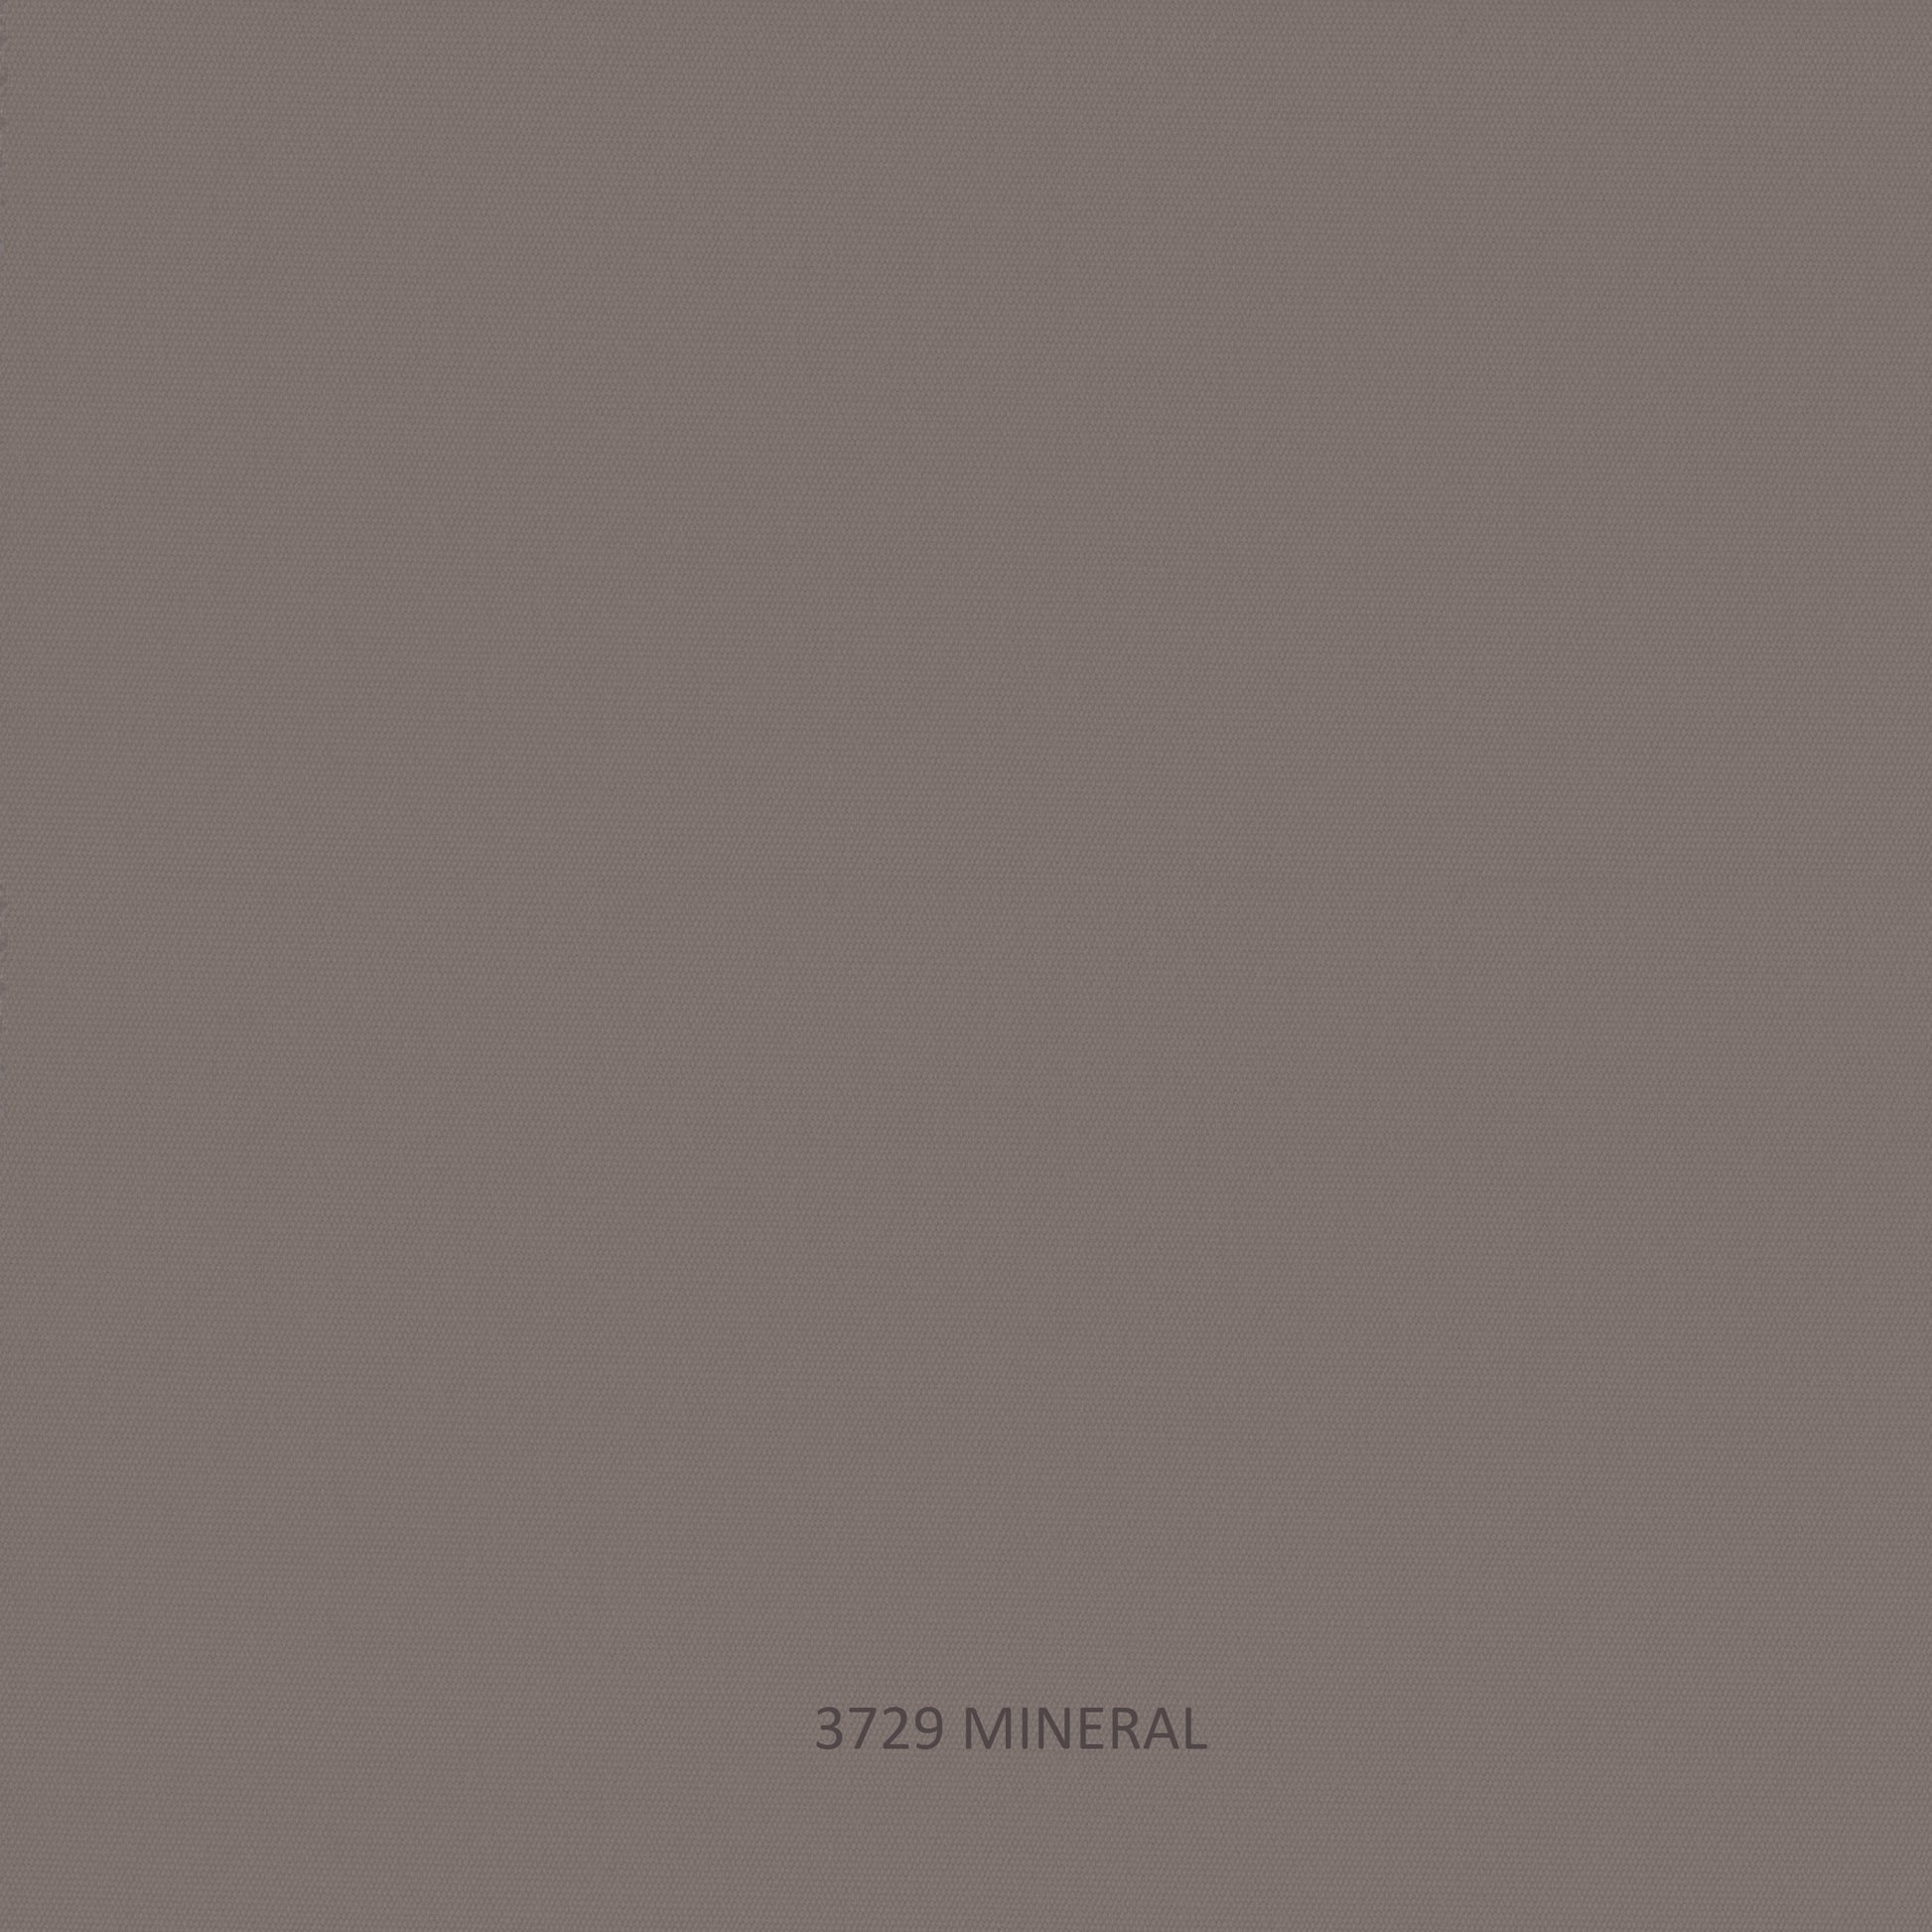 Milano Love Seat - PadioLiving - Milano Love Seat - Outdoor Love Seat - Dark Grey 21mm Strap - Mineral (£1715) - PadioLiving